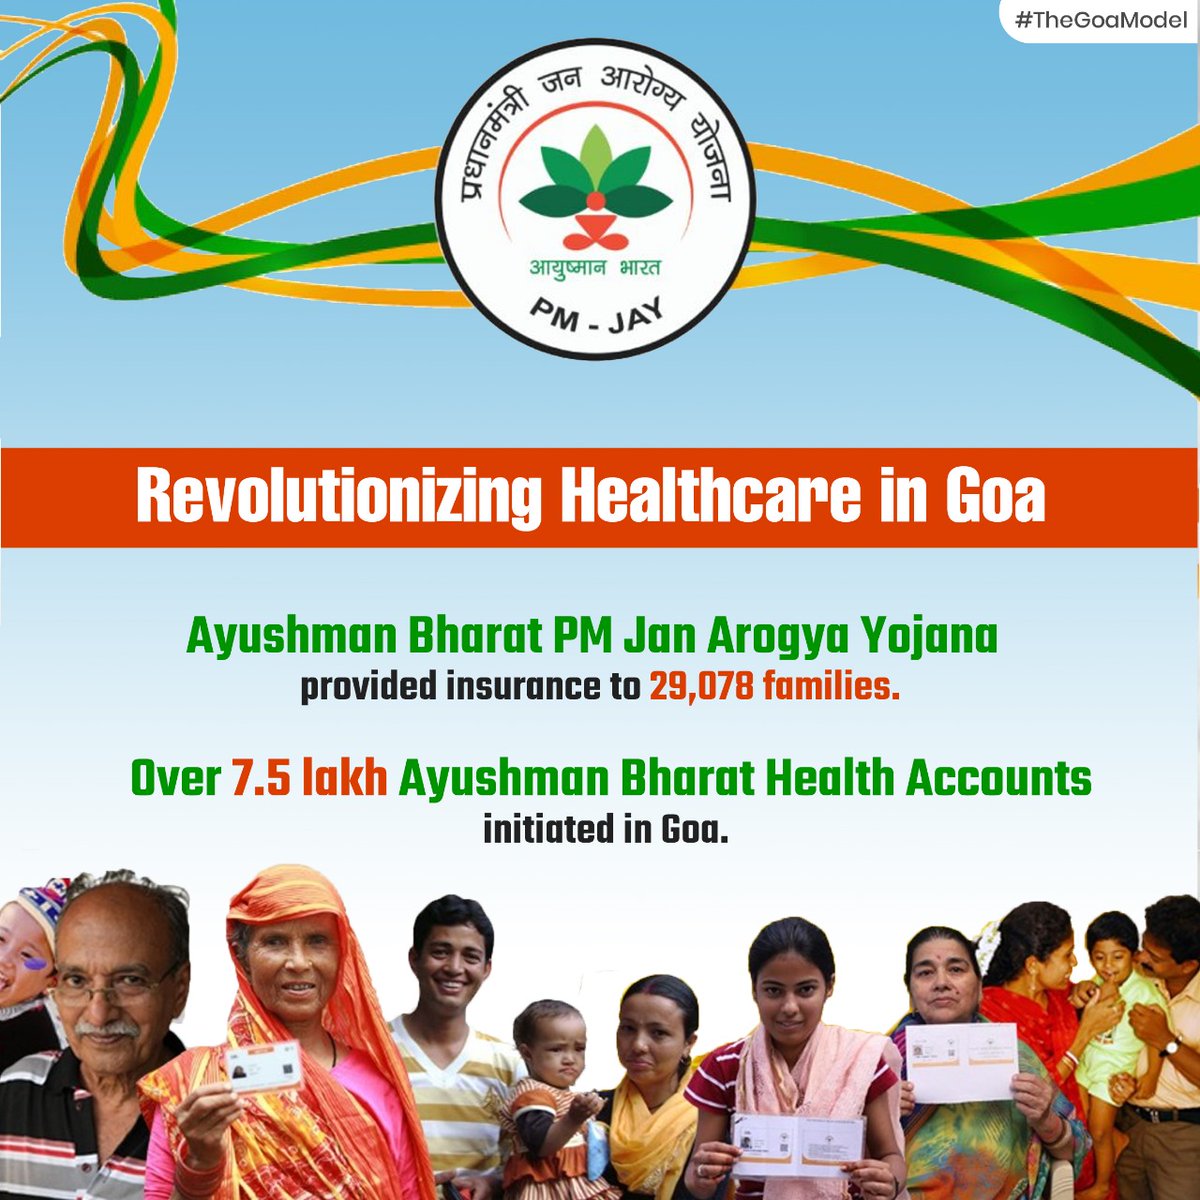 Goa's healthcare strides continue: Ayushman Bharat PM Jan Arogya Yojana insured 29,078 families and initiated over 7.5 lakh Ayushman Bharat Health Accounts, transforming access and affordability. #HealthcareRevolution #TheGoaModel
#GoaHealthcare #AyushmanBharat #PMJanArogyaYojana